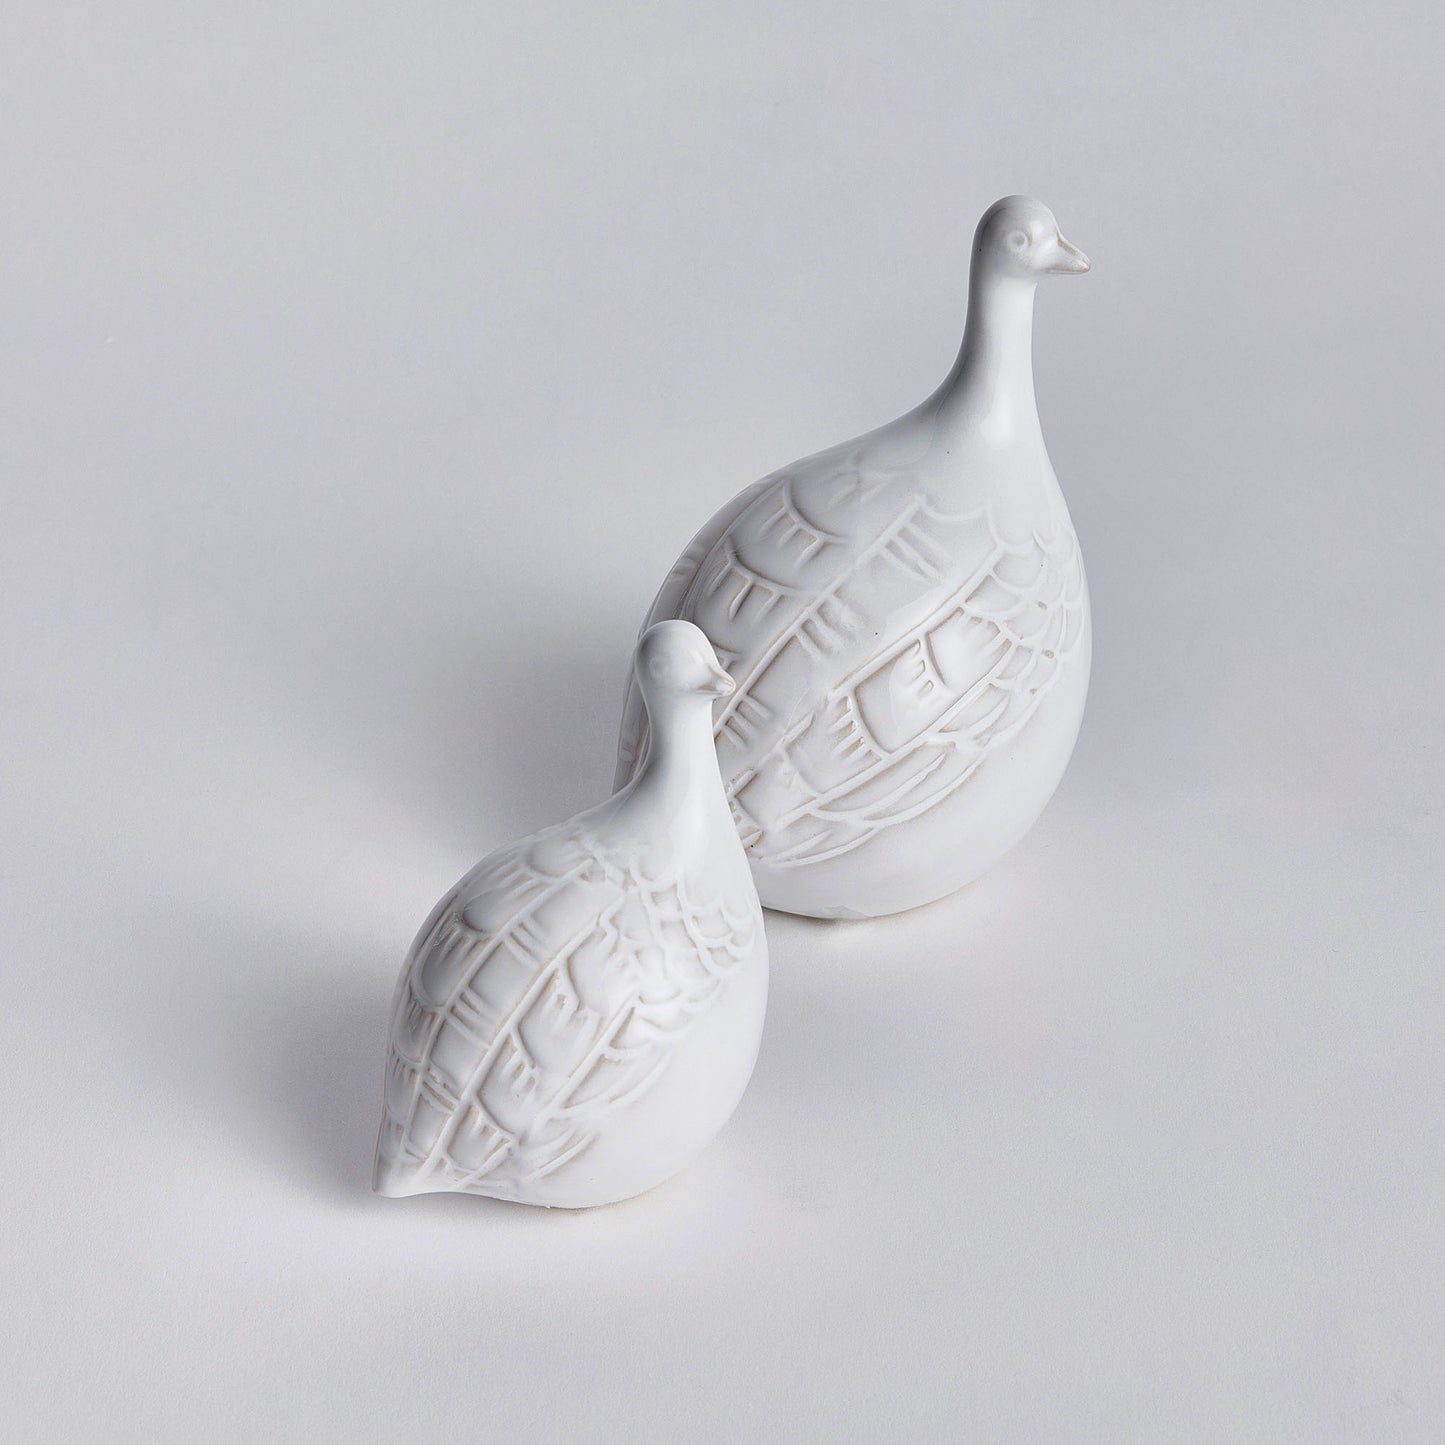 Decorative ceramic bird objects on white background.